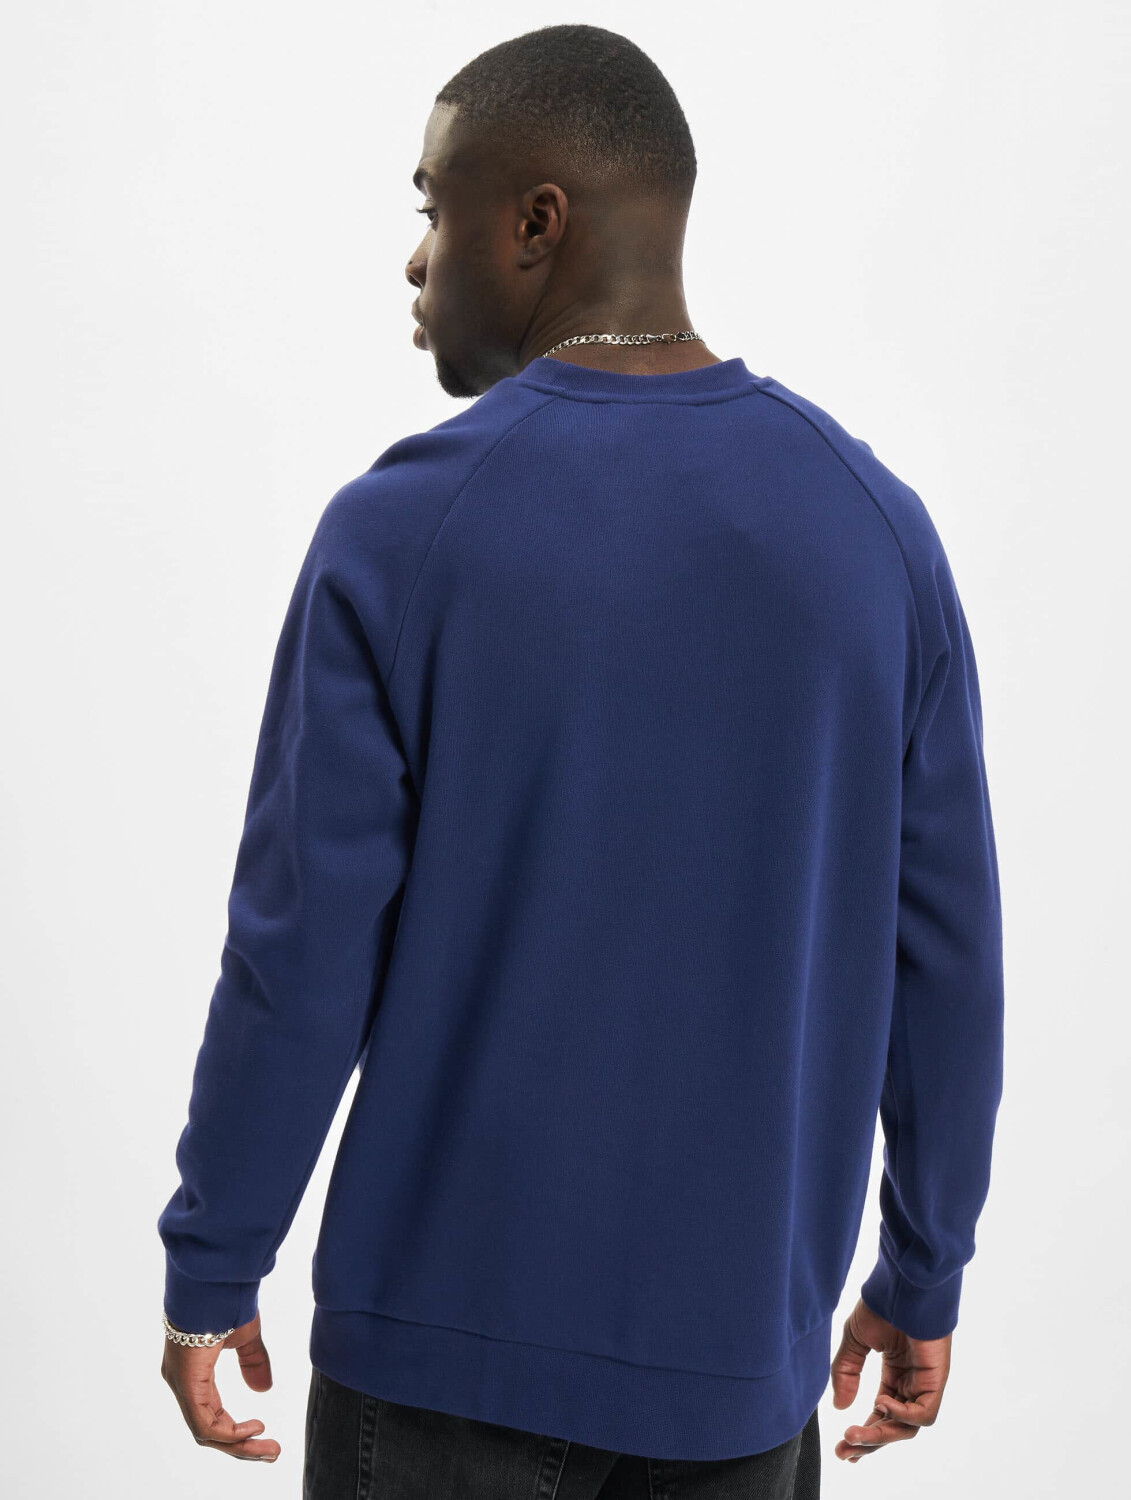 Buy Adidas adicolor (H06654) – dark Sweatshirt blue (Today) Best Deals from £22.99 on Classics Trefoil